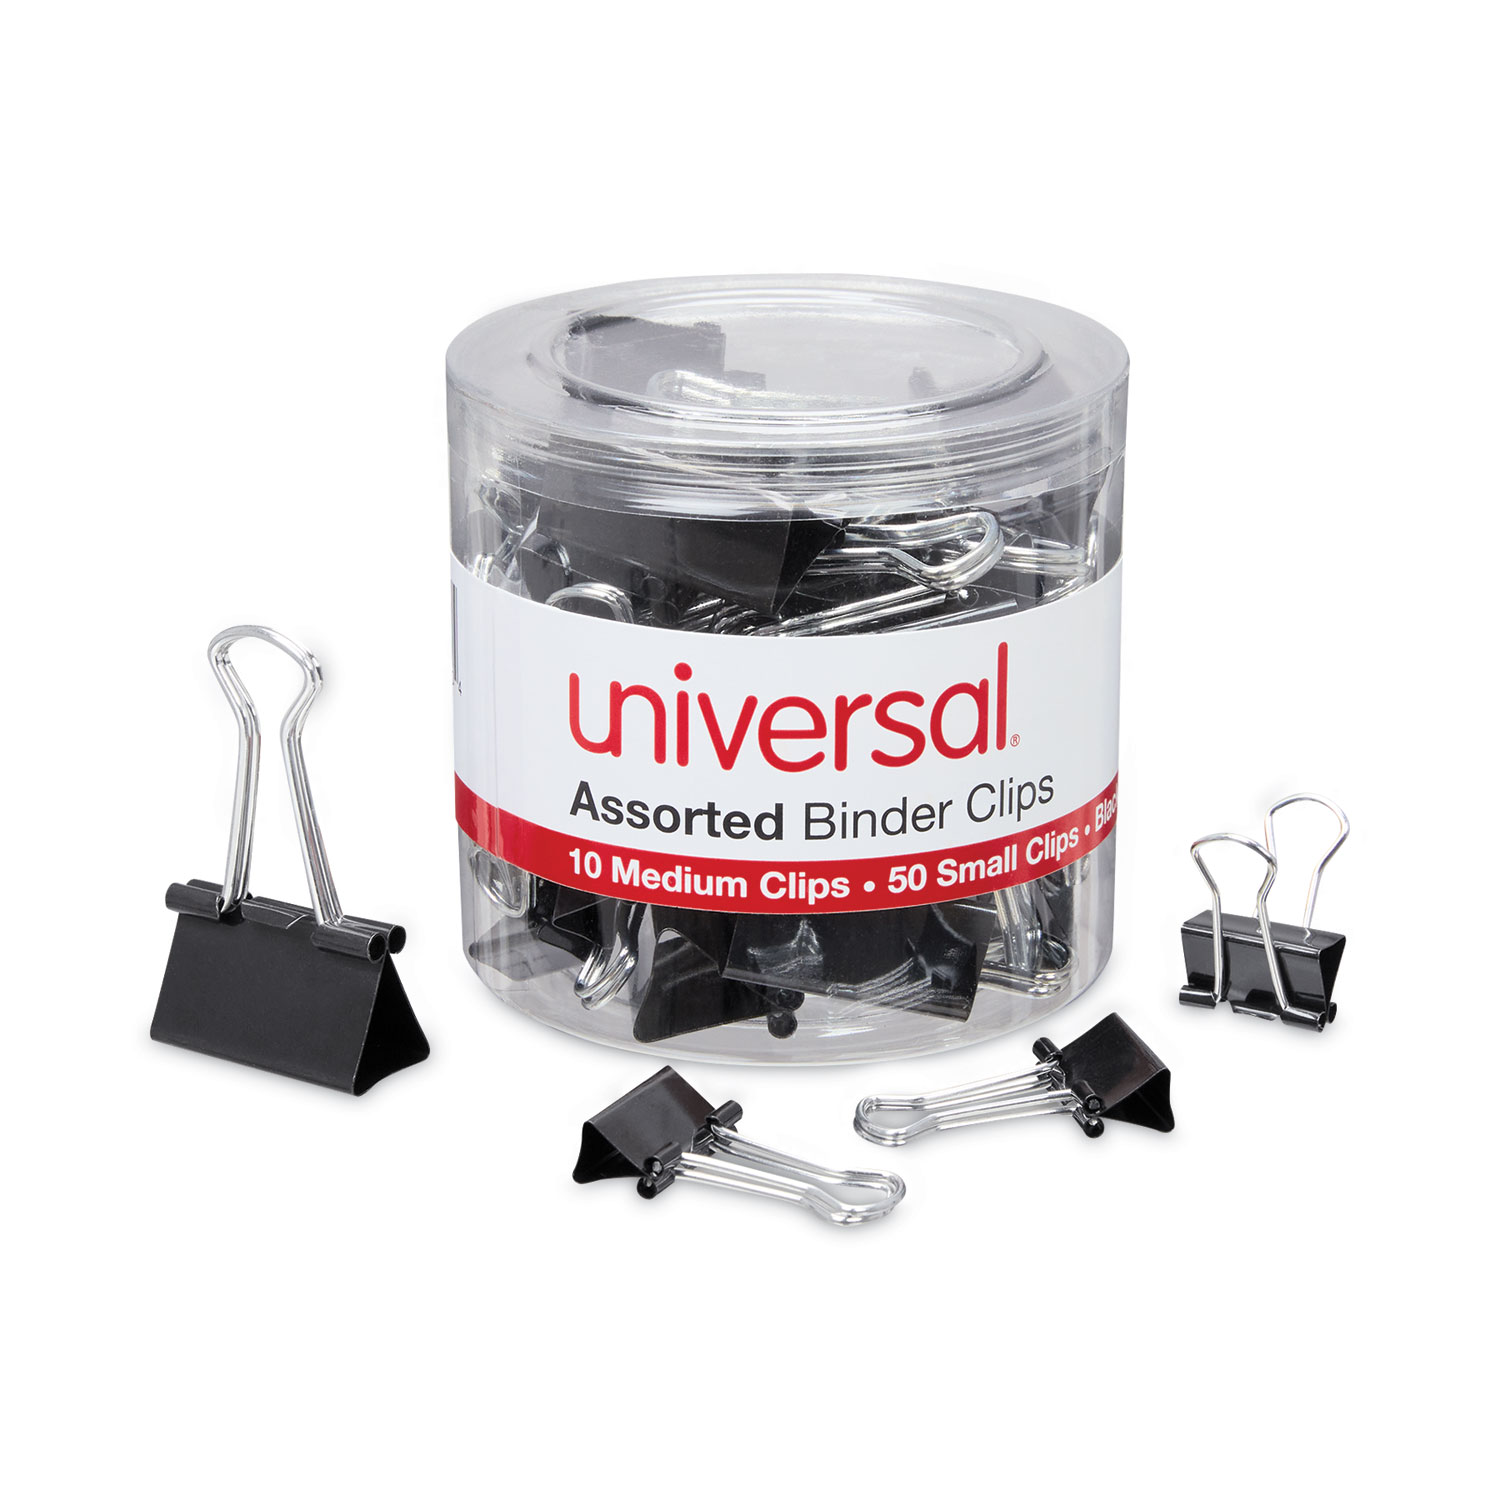 UNV10210 - Medium Binder Clips by Universal